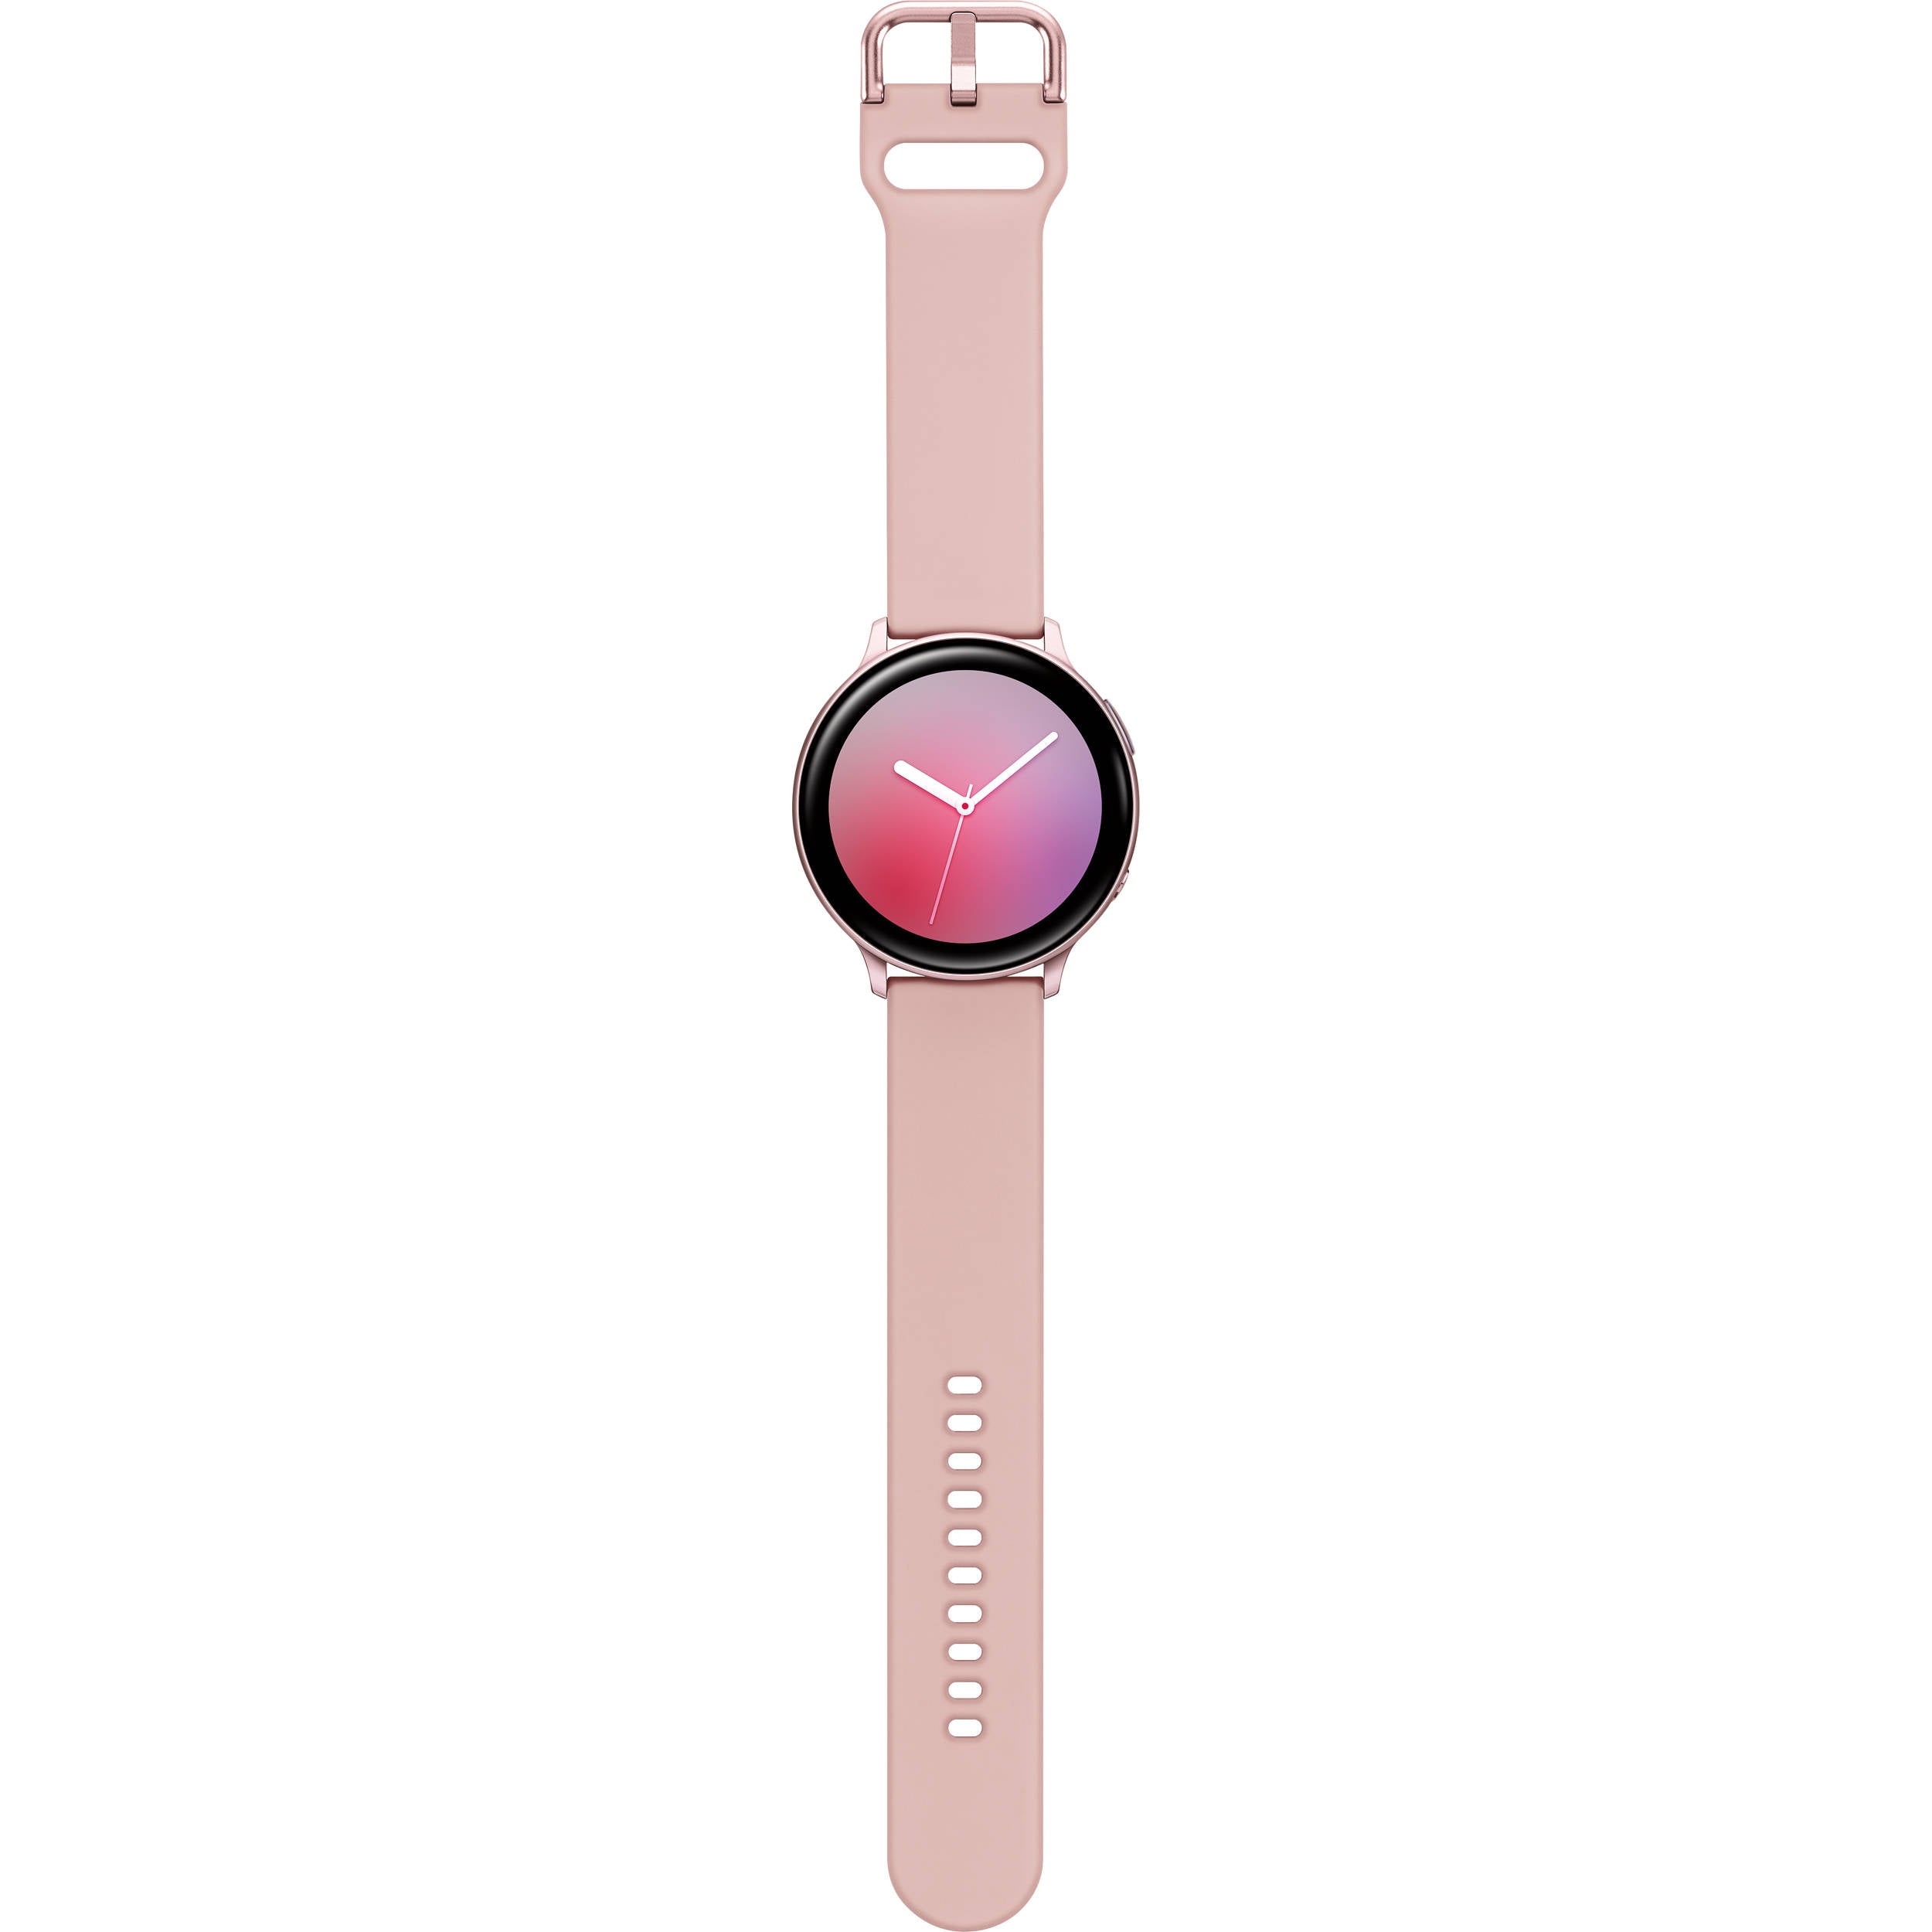 Samsung SR-SM-R830NZDAXAR-RB Galaxy Watch Active2 44mm Bluetooth Pink Gold - Seller Refurbished